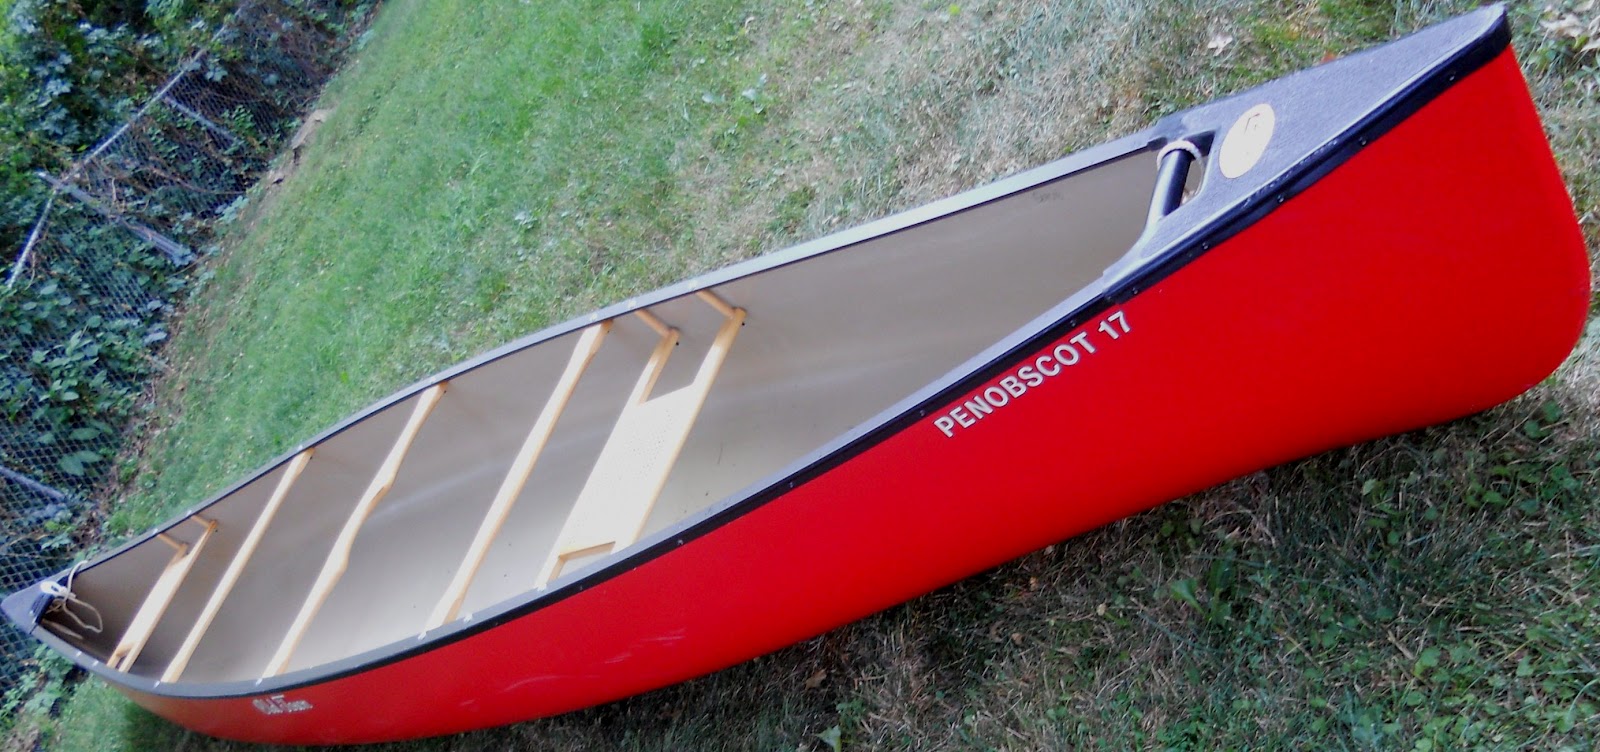 sale cedar strip canoe for sale http heirloomkayak com 858 2 the wood 